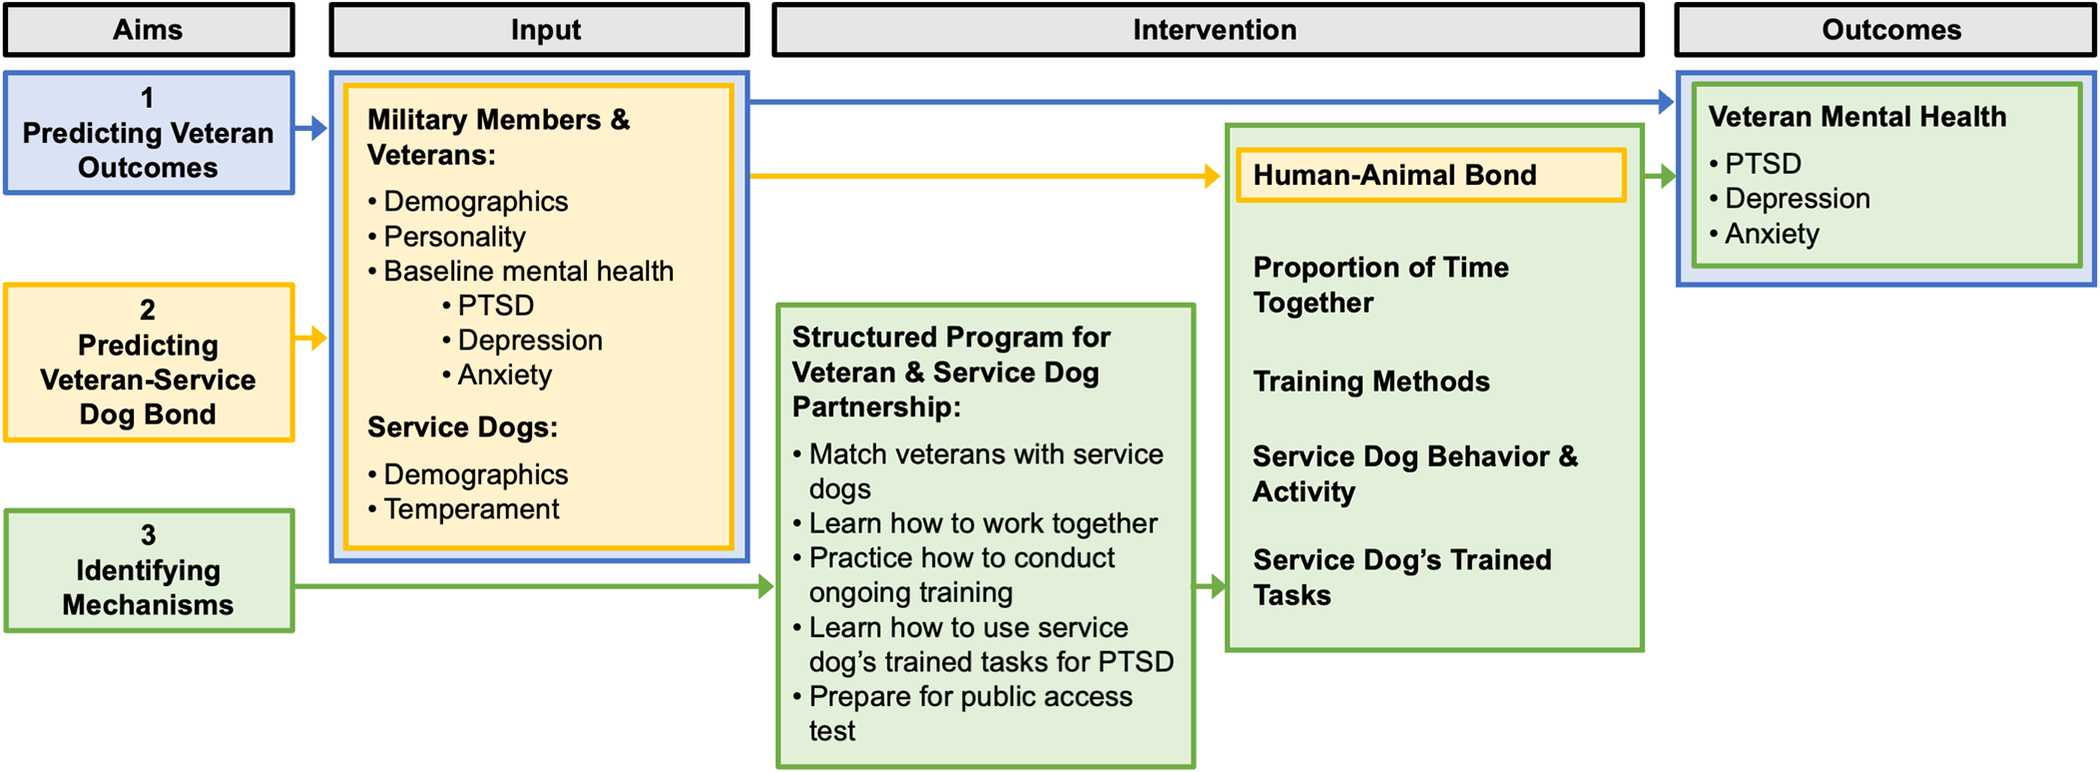 how-do-service-dogs-help-ptsd-symptoms-in-veterans-u-s-medicine